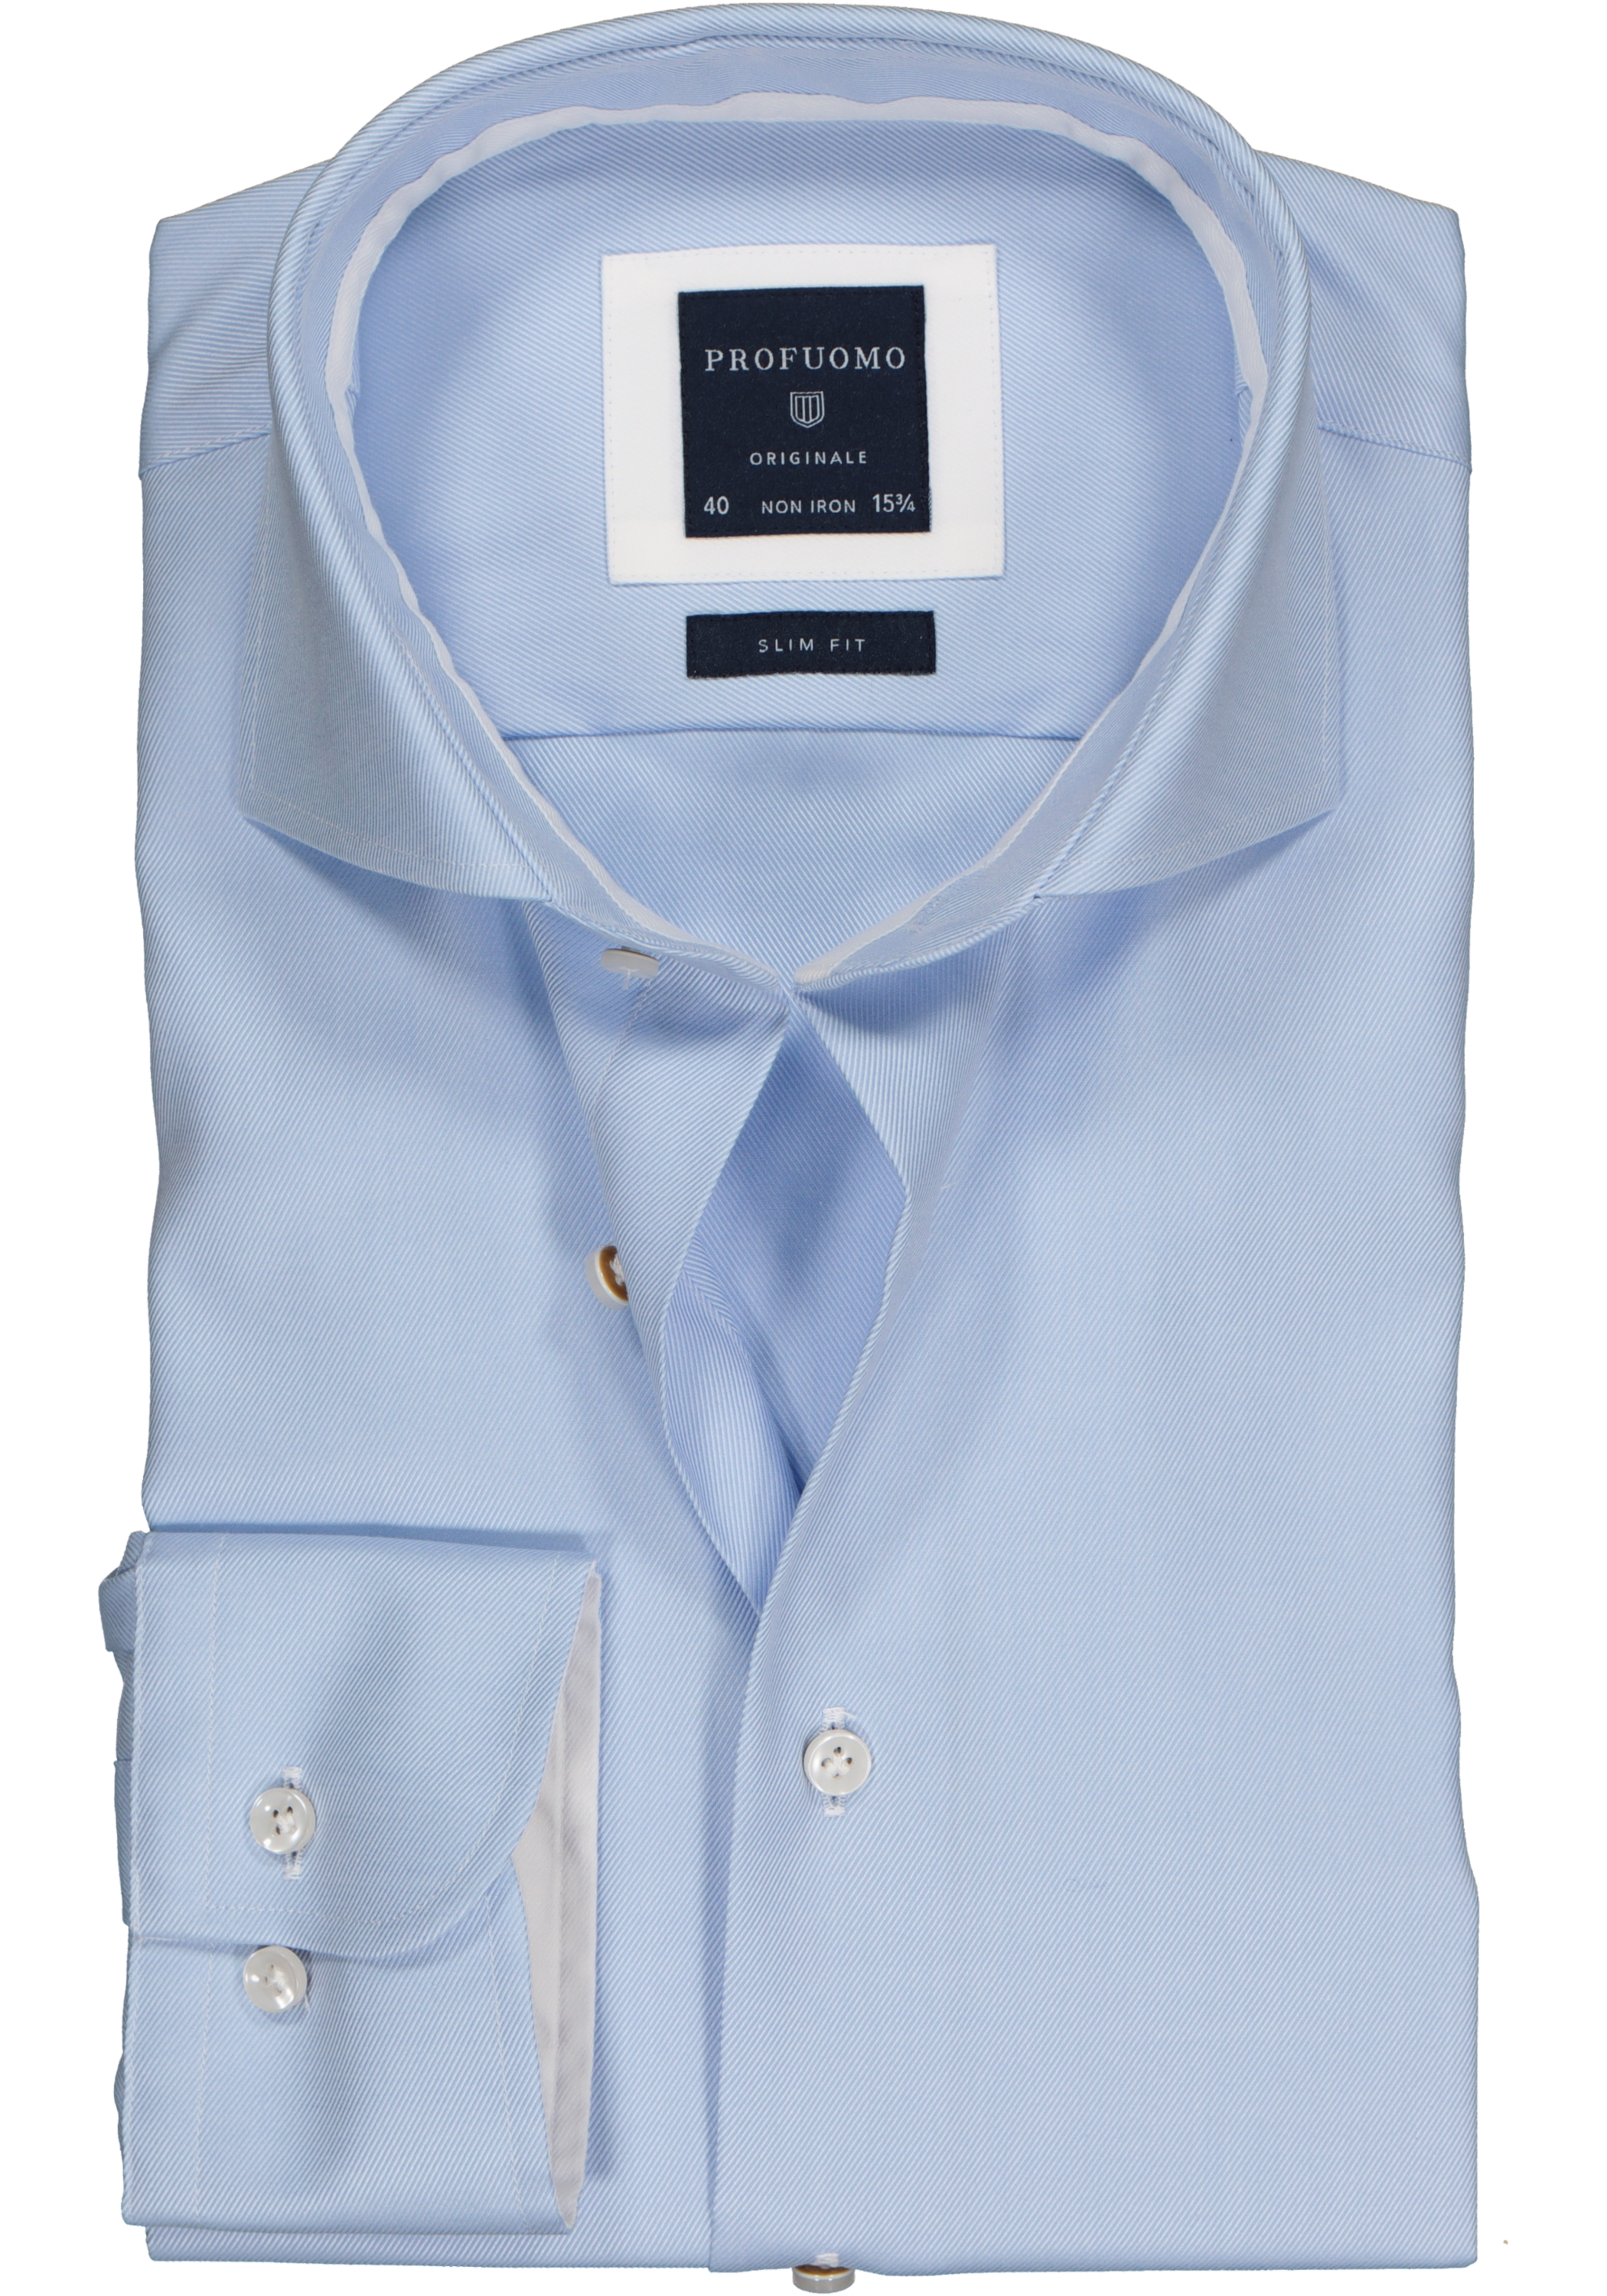 Profuomo Originale slim fit overhemd, 2-ply twill, lichtblauw (contrast) 